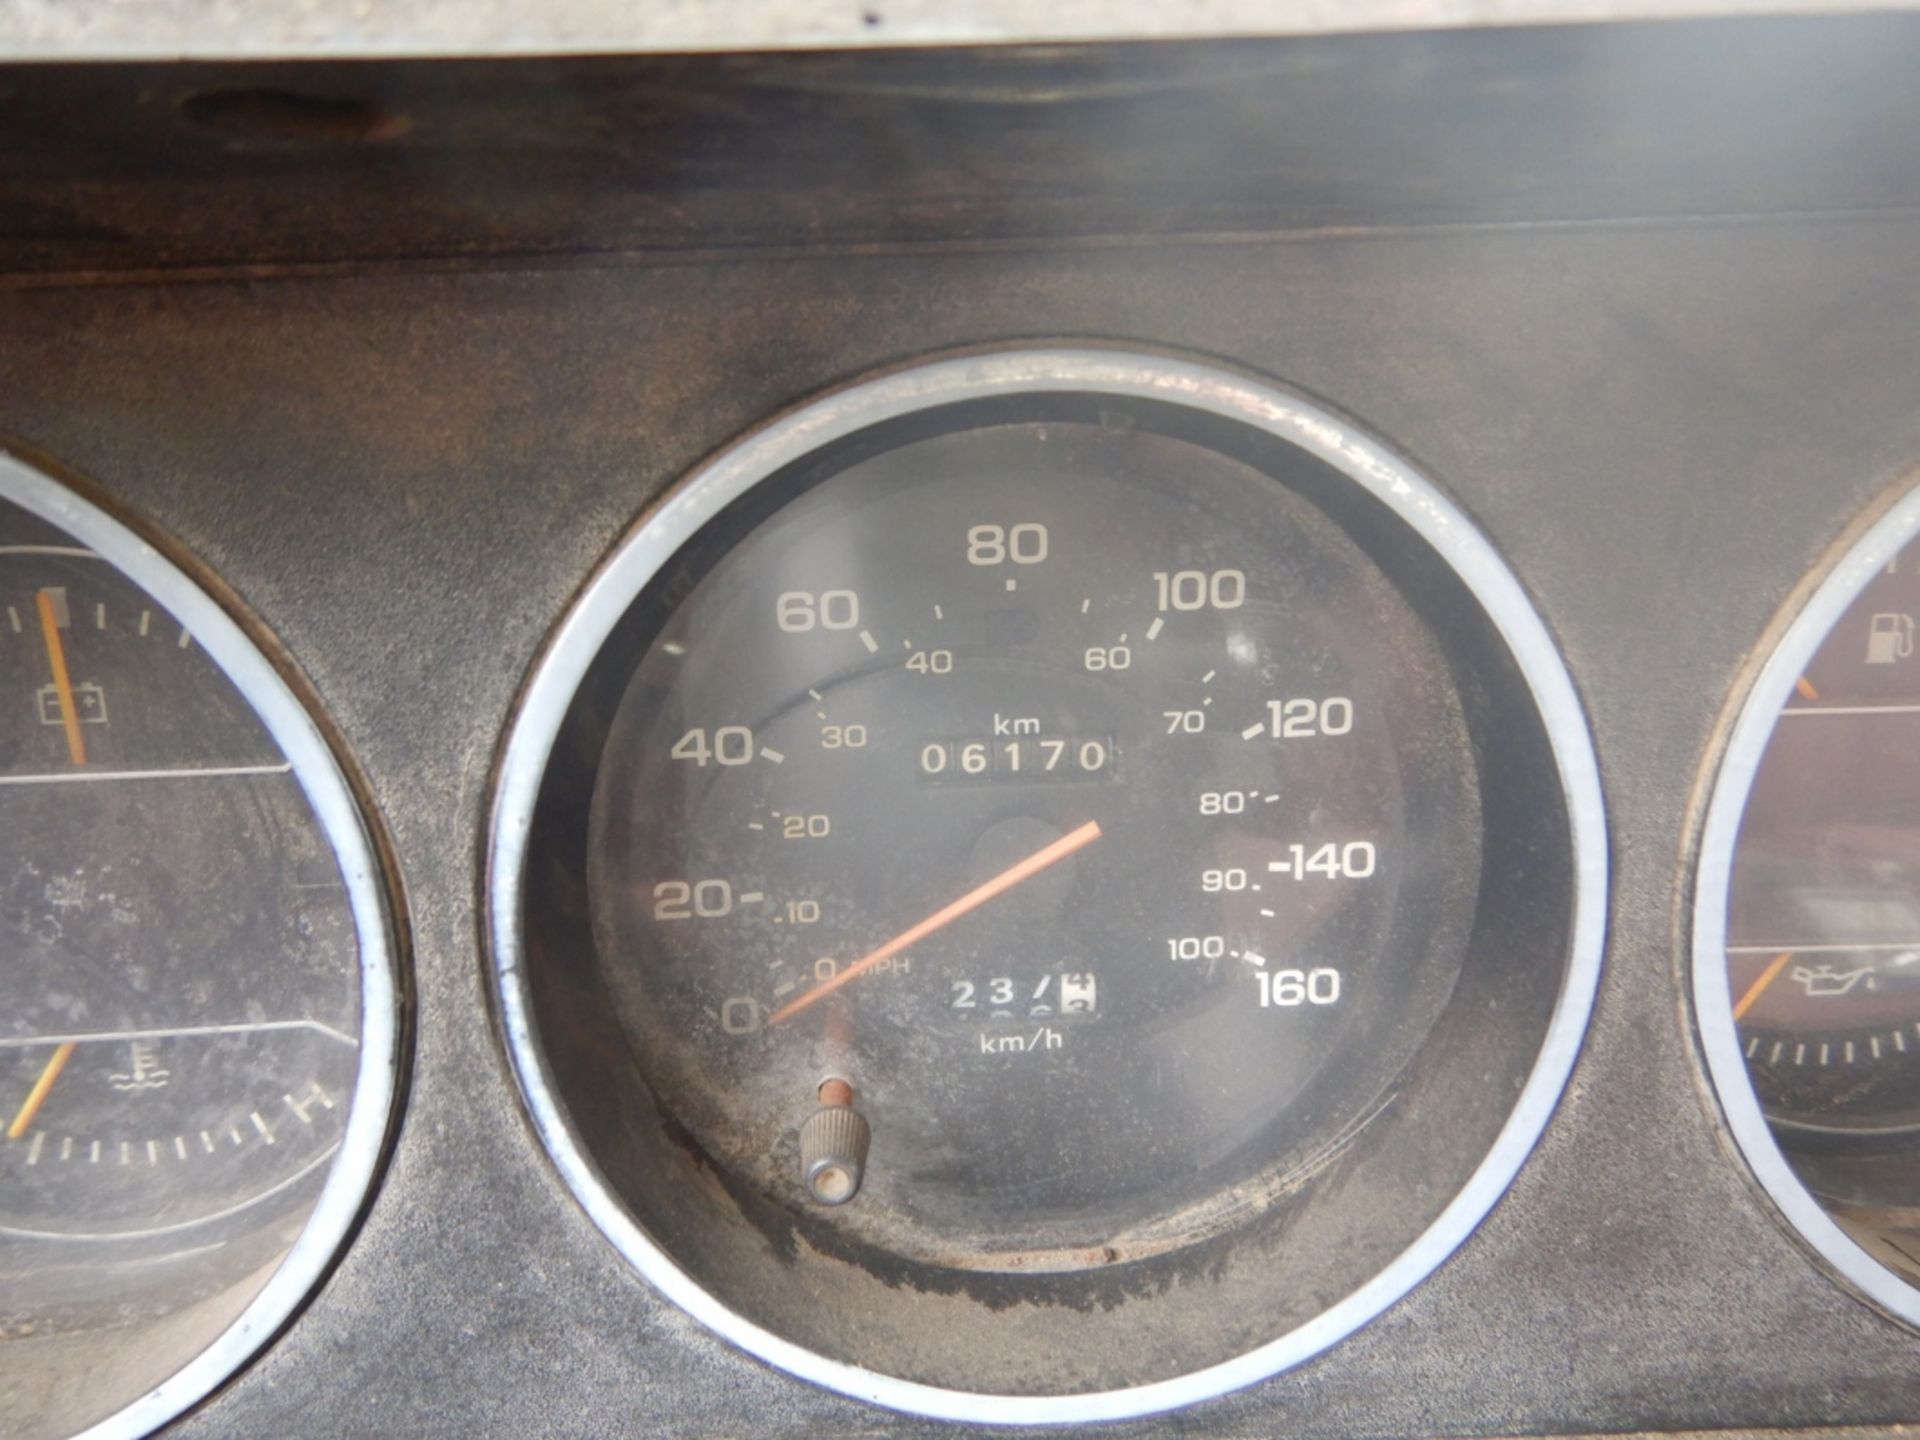 1984 DODGE 350 CUSTOM 1-TON TRUCK W/360-V8 ENGINE, 4 SPD. TRANS, 06170 MILES SHOWING, DUAL WHEELS, - Image 9 of 10